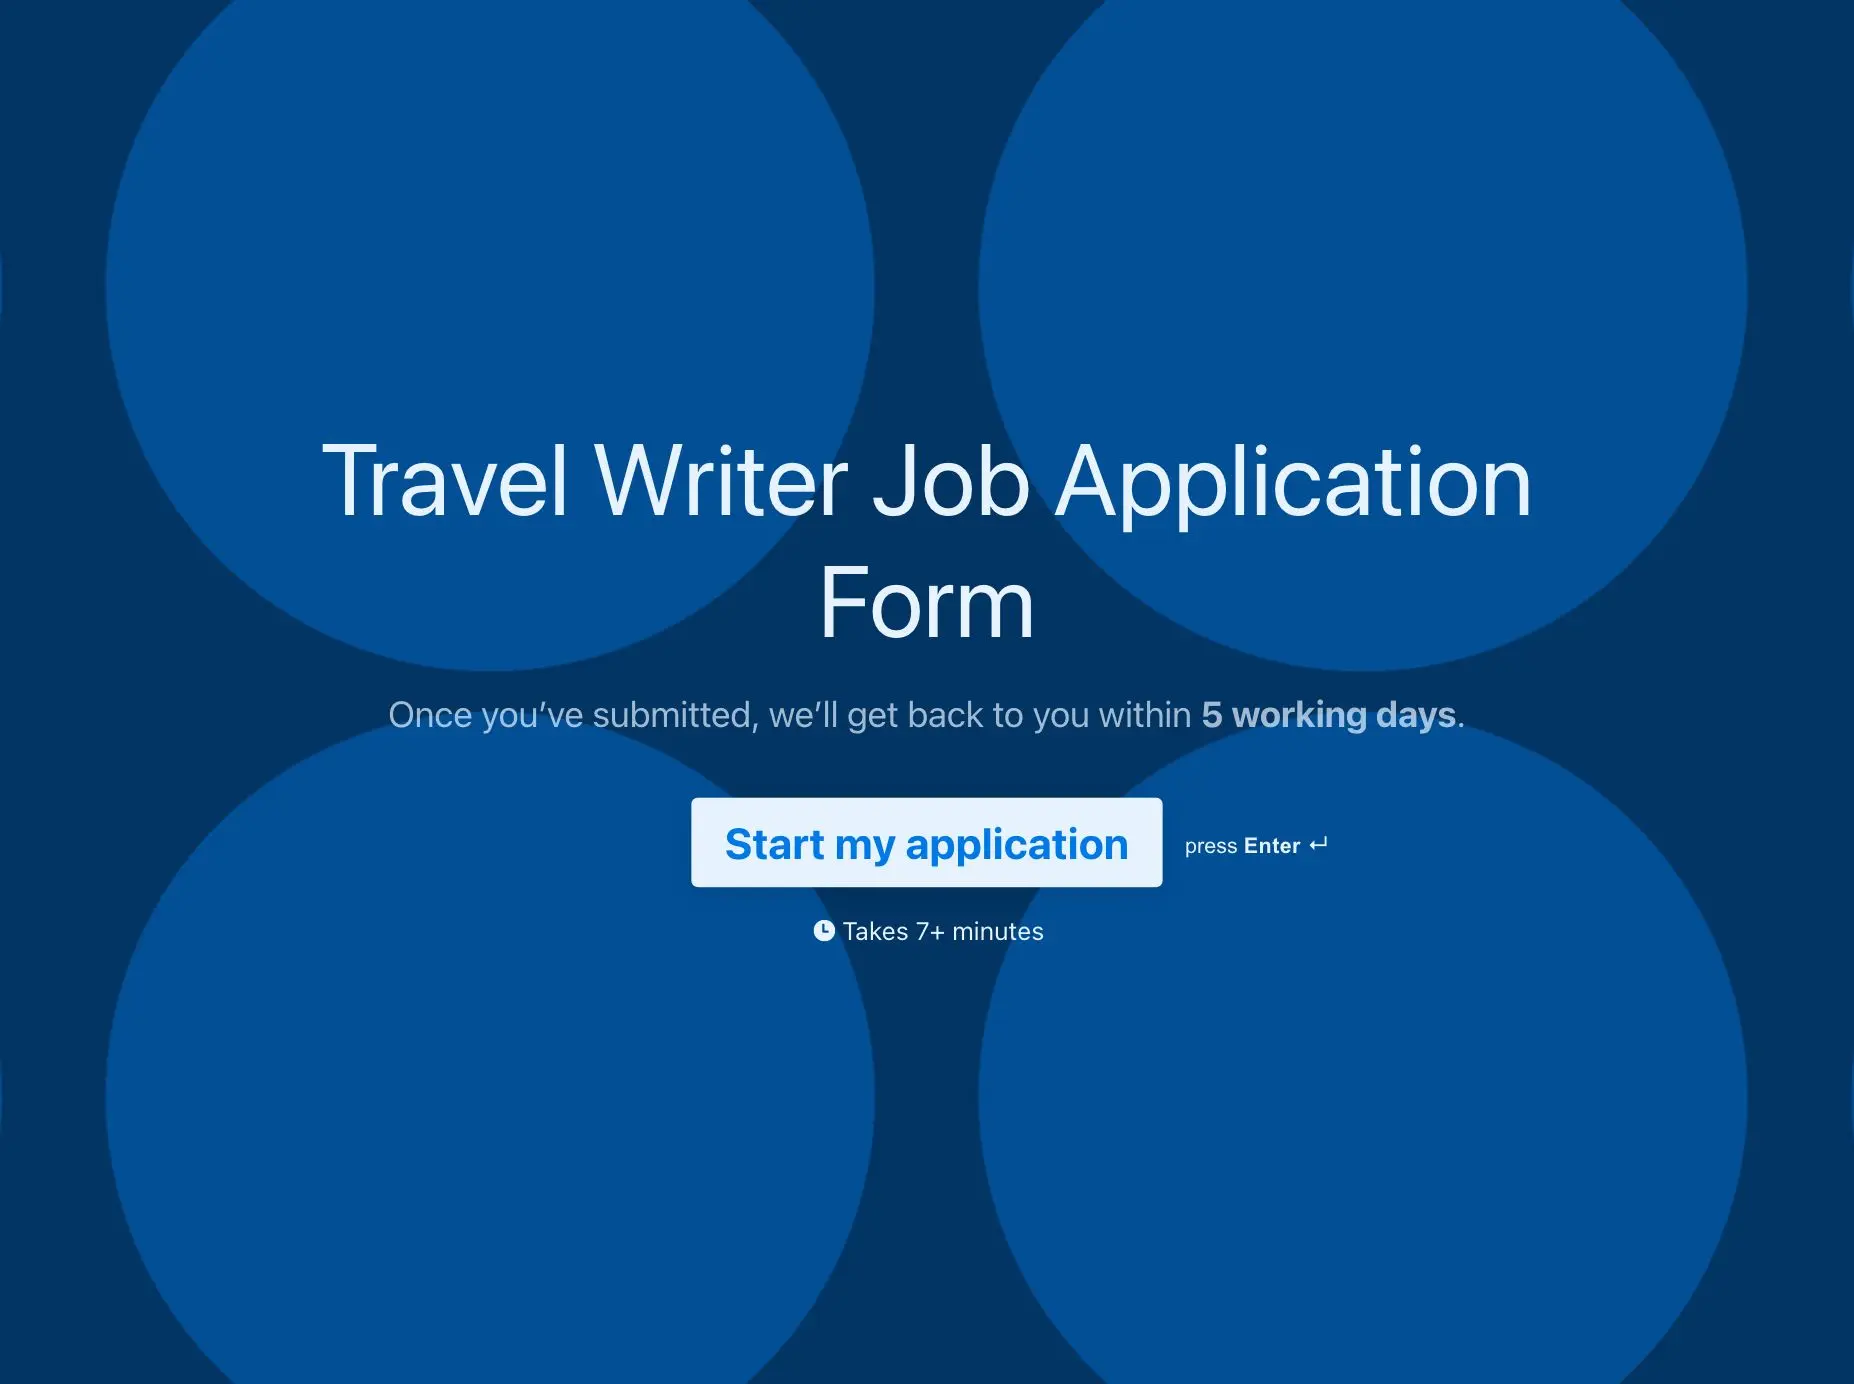 Travel Writer Job Application Form Template Hero